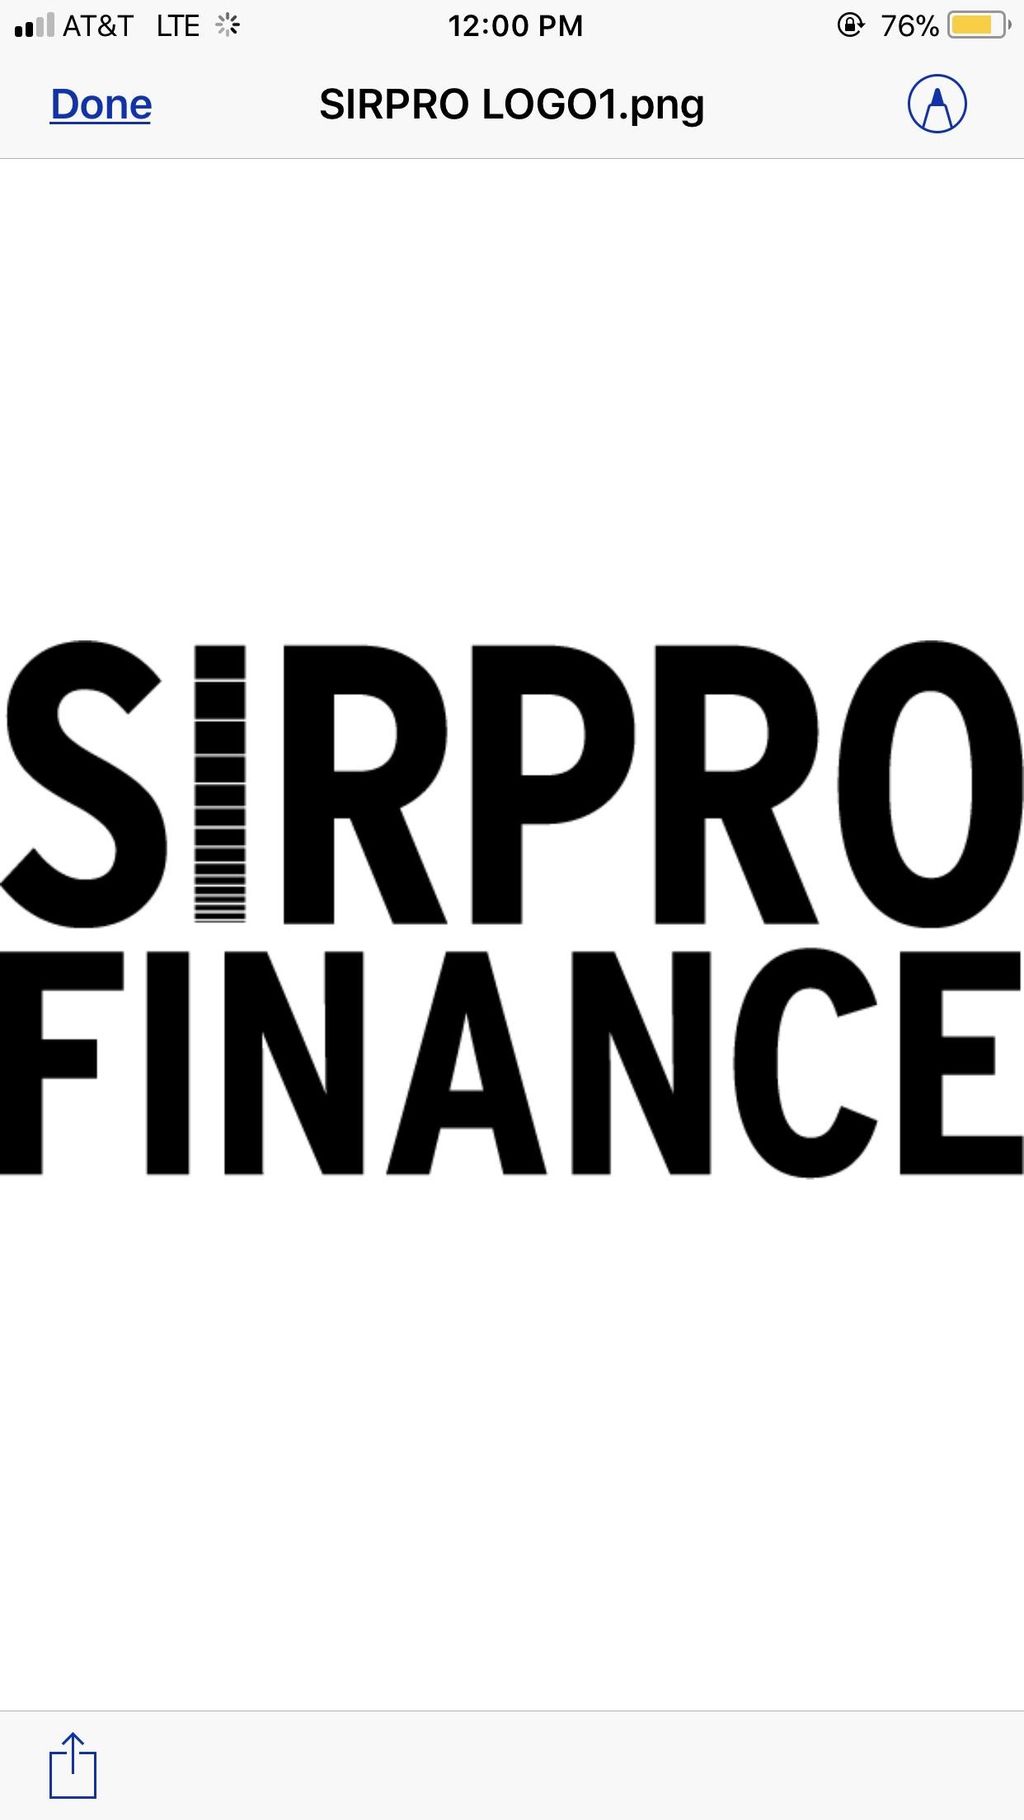 SIRPRO FINANCE, LLC